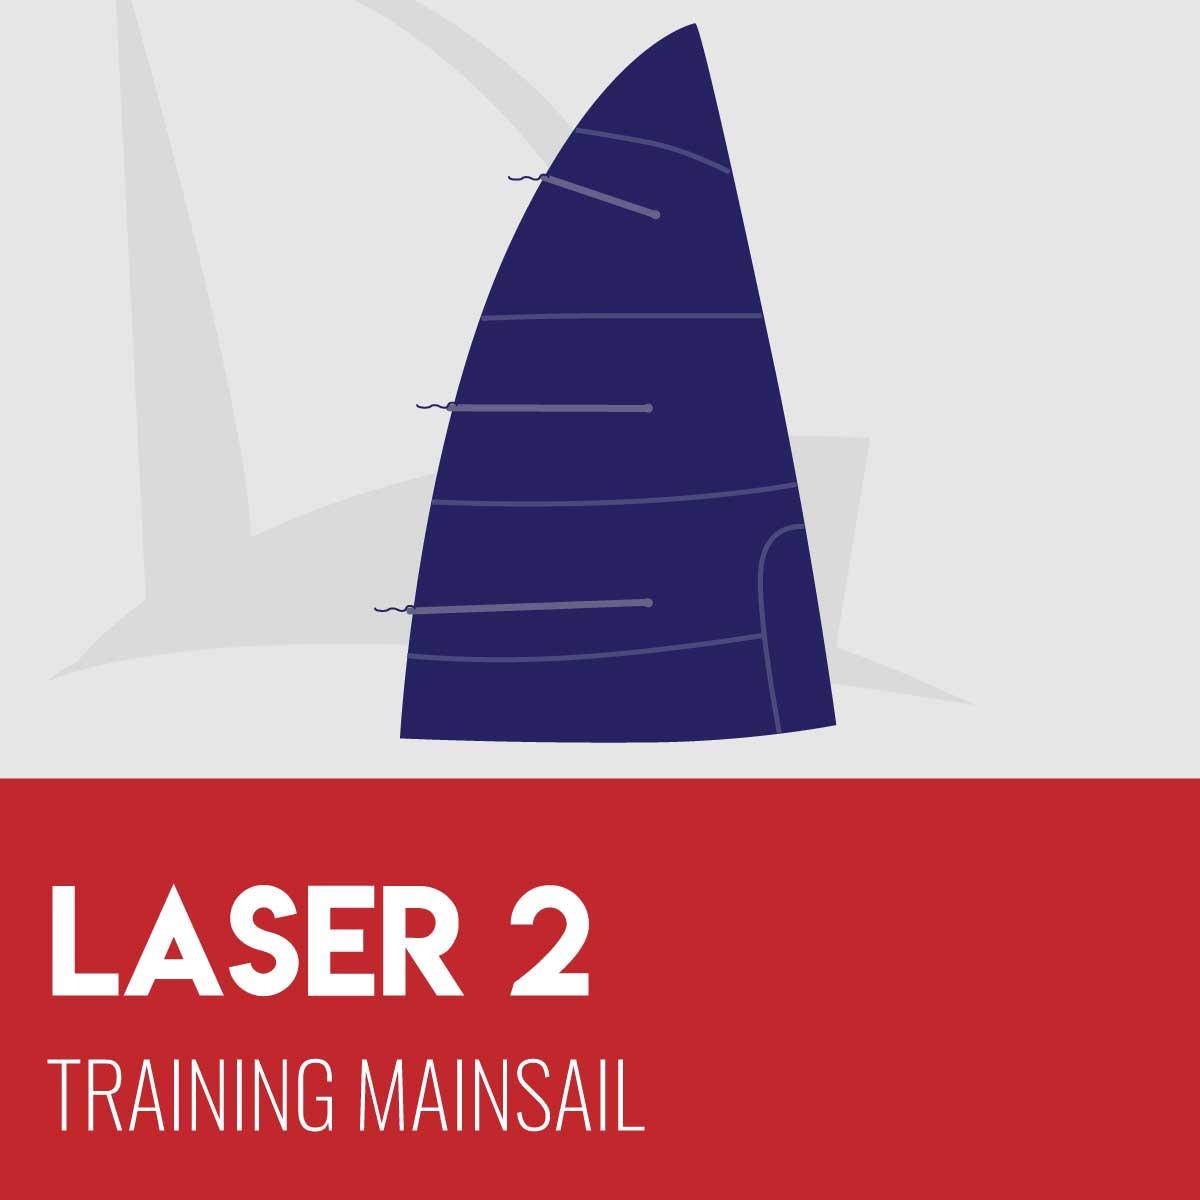 Laser 2 Training Mainsail